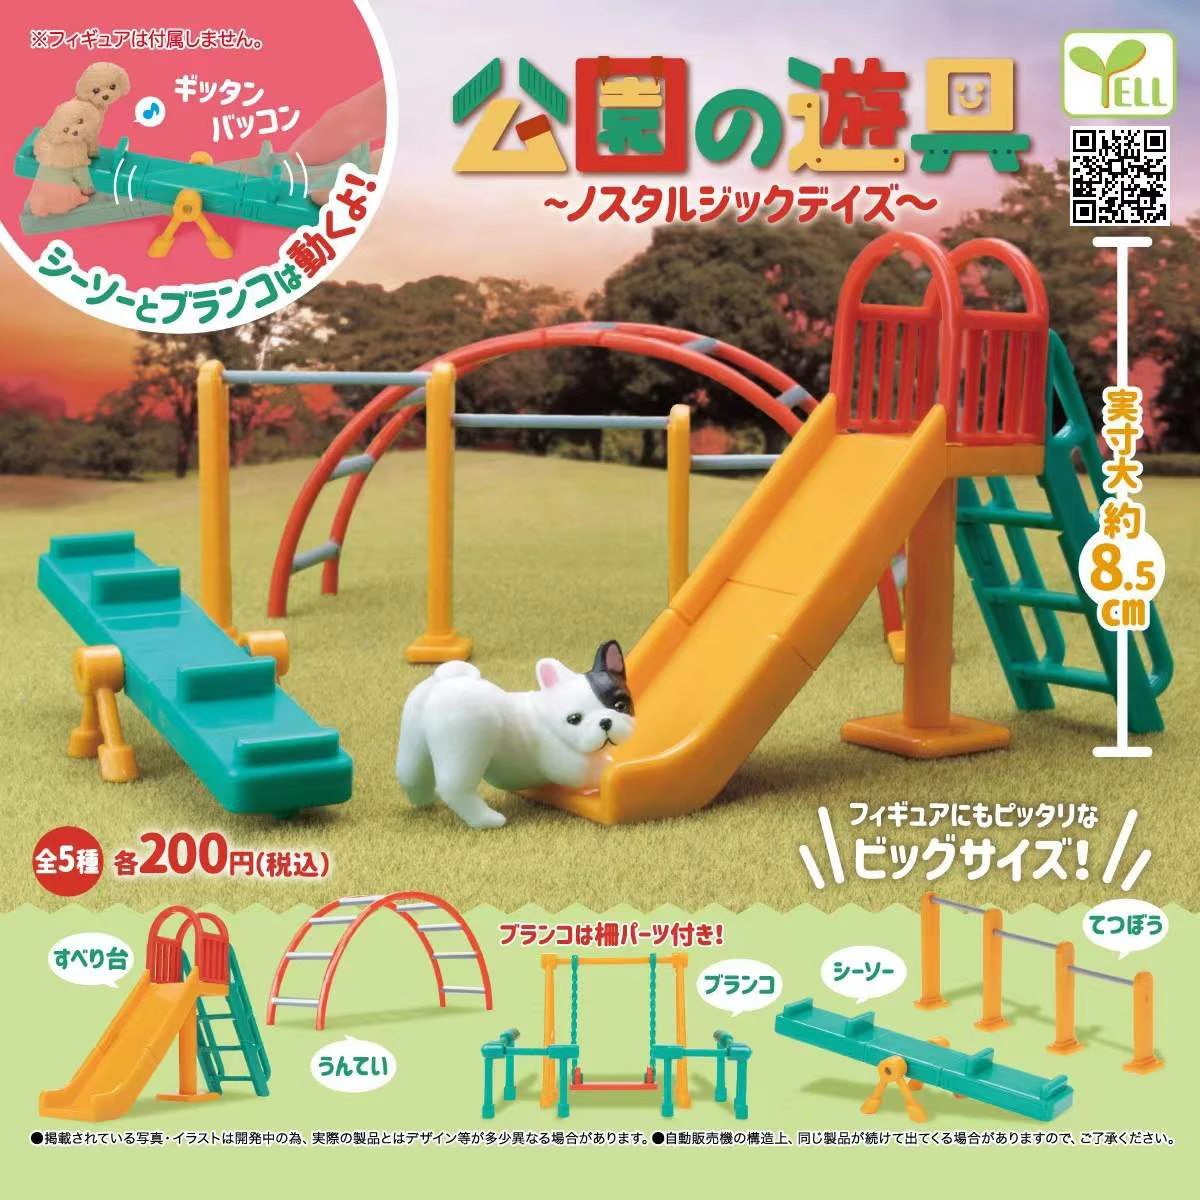 

Japan genuine capsule toys pets park playground Slide horizontal bar seesaw hanging bar dollhouse miniatures gashapon figures